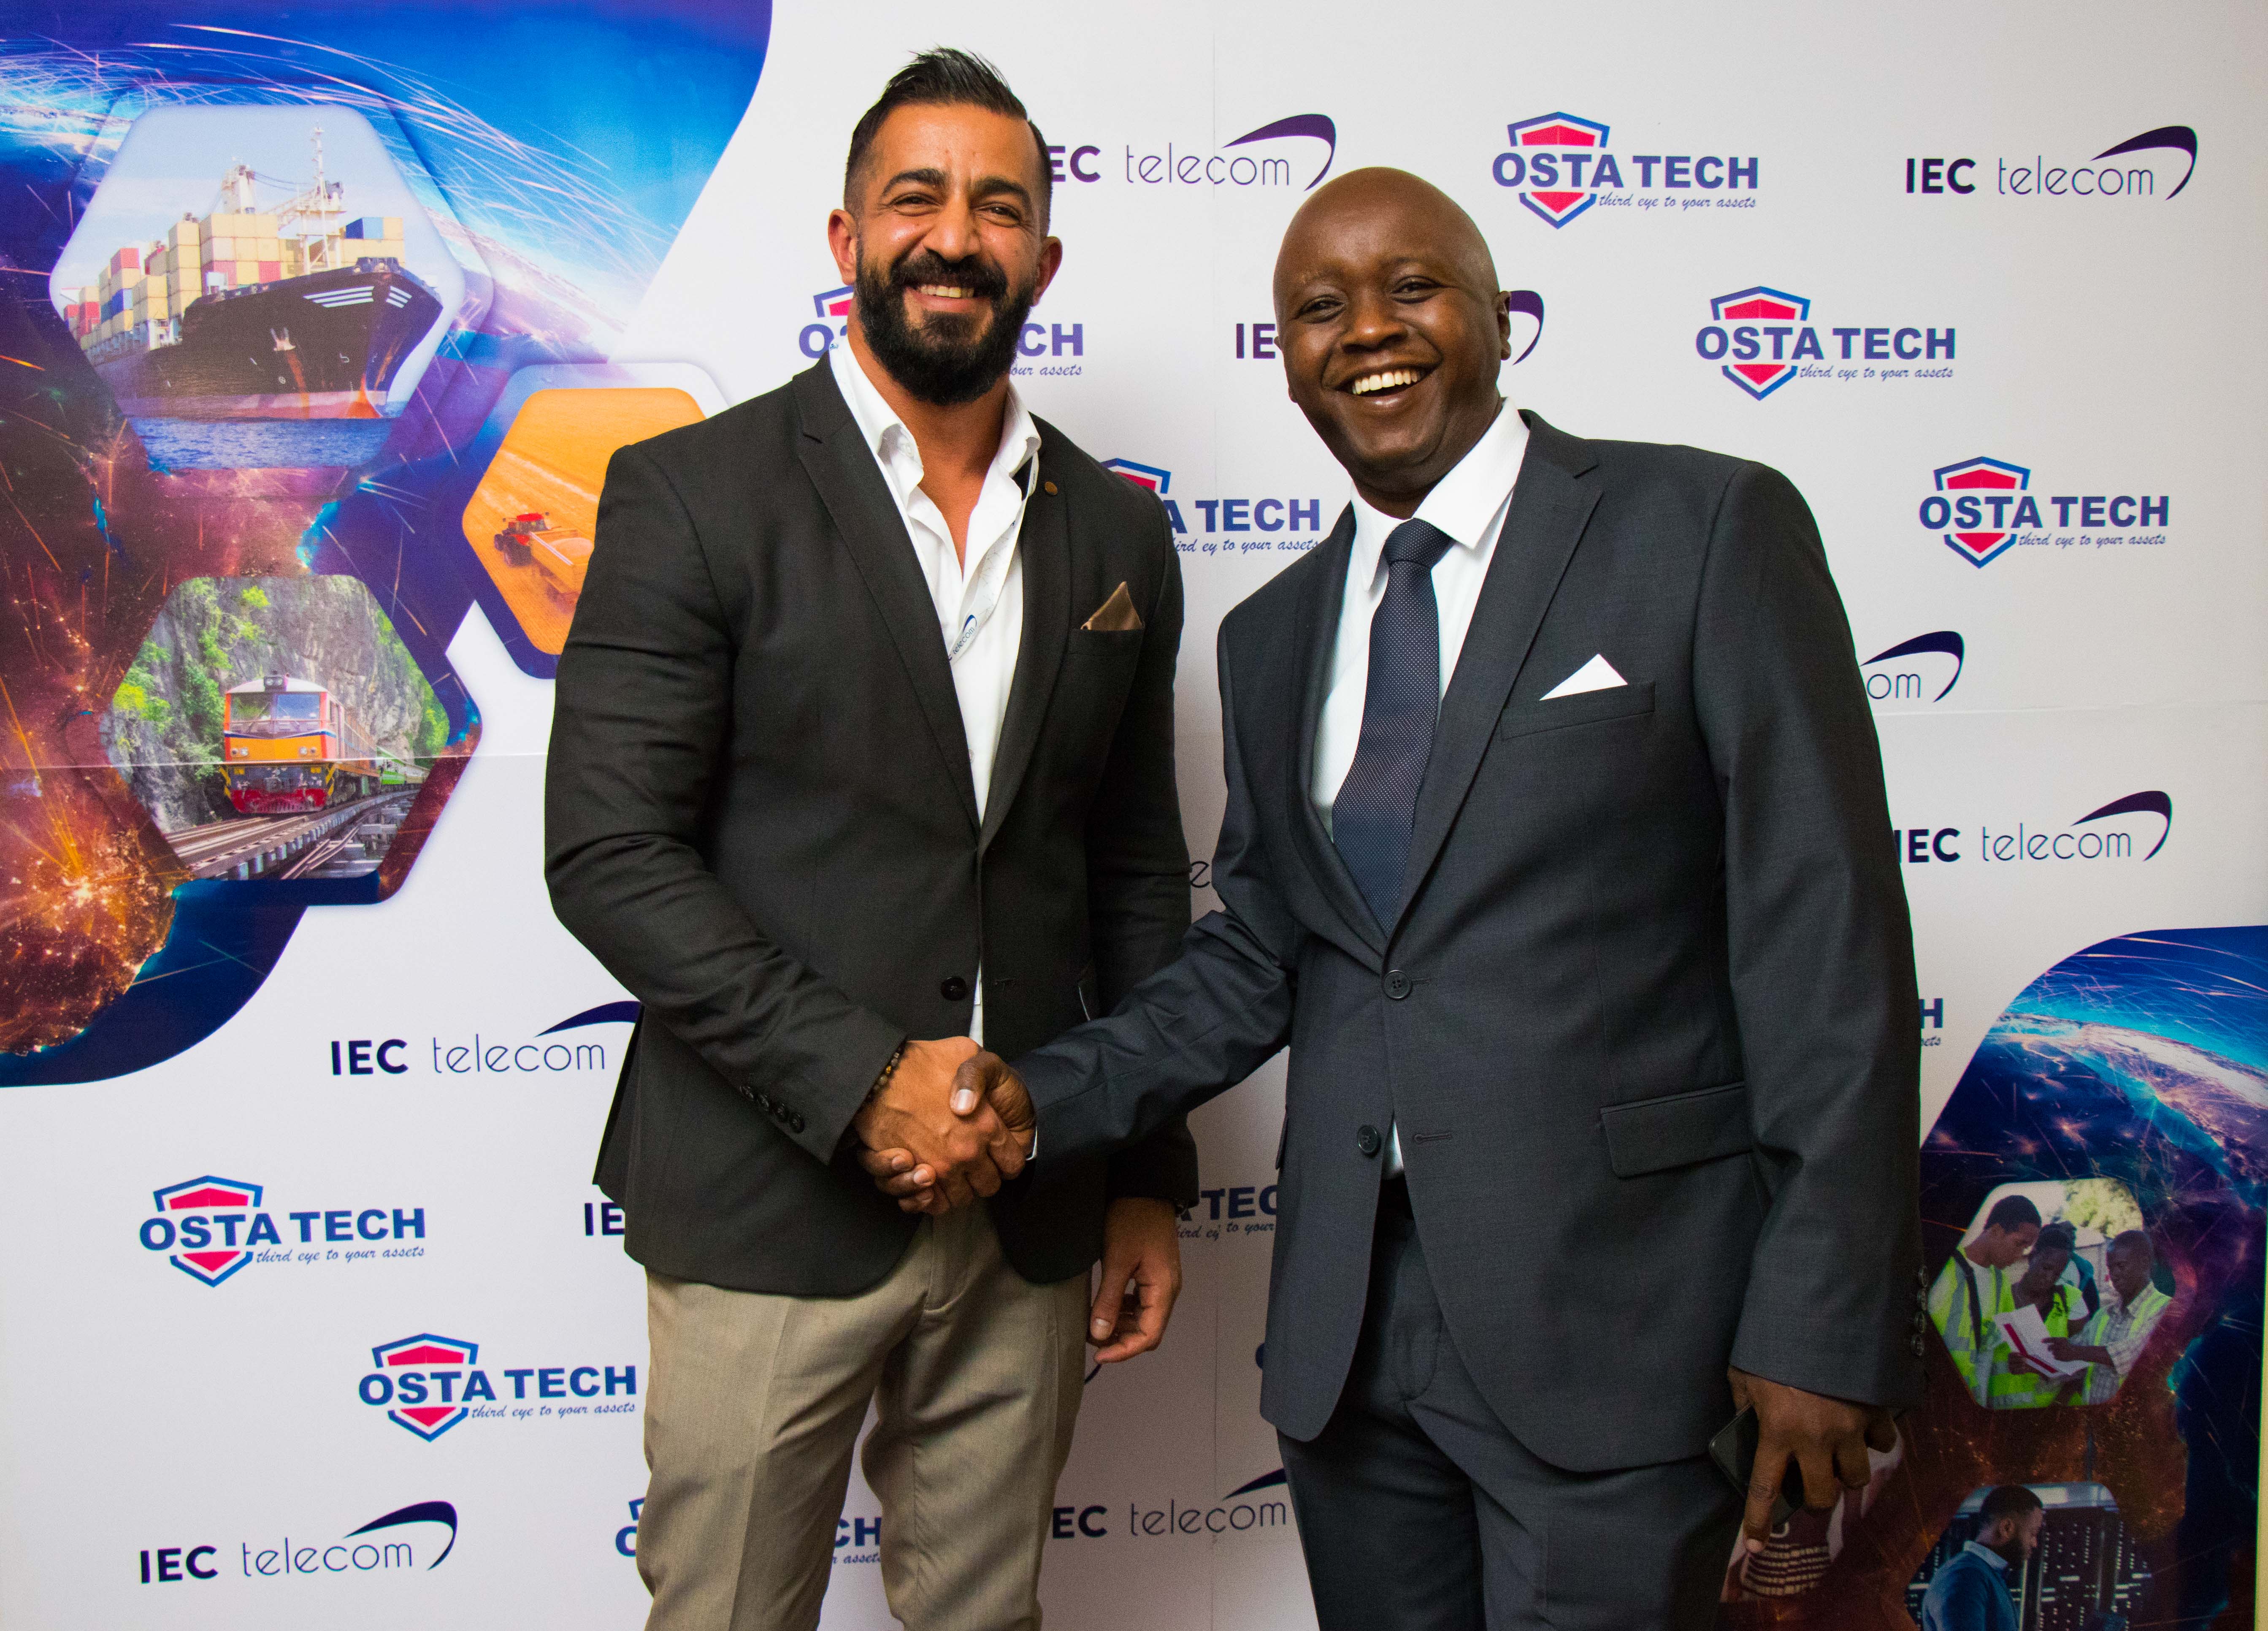 Ostatech Limited CEO, Oscar Mwai (right) with IEC Telecom Group